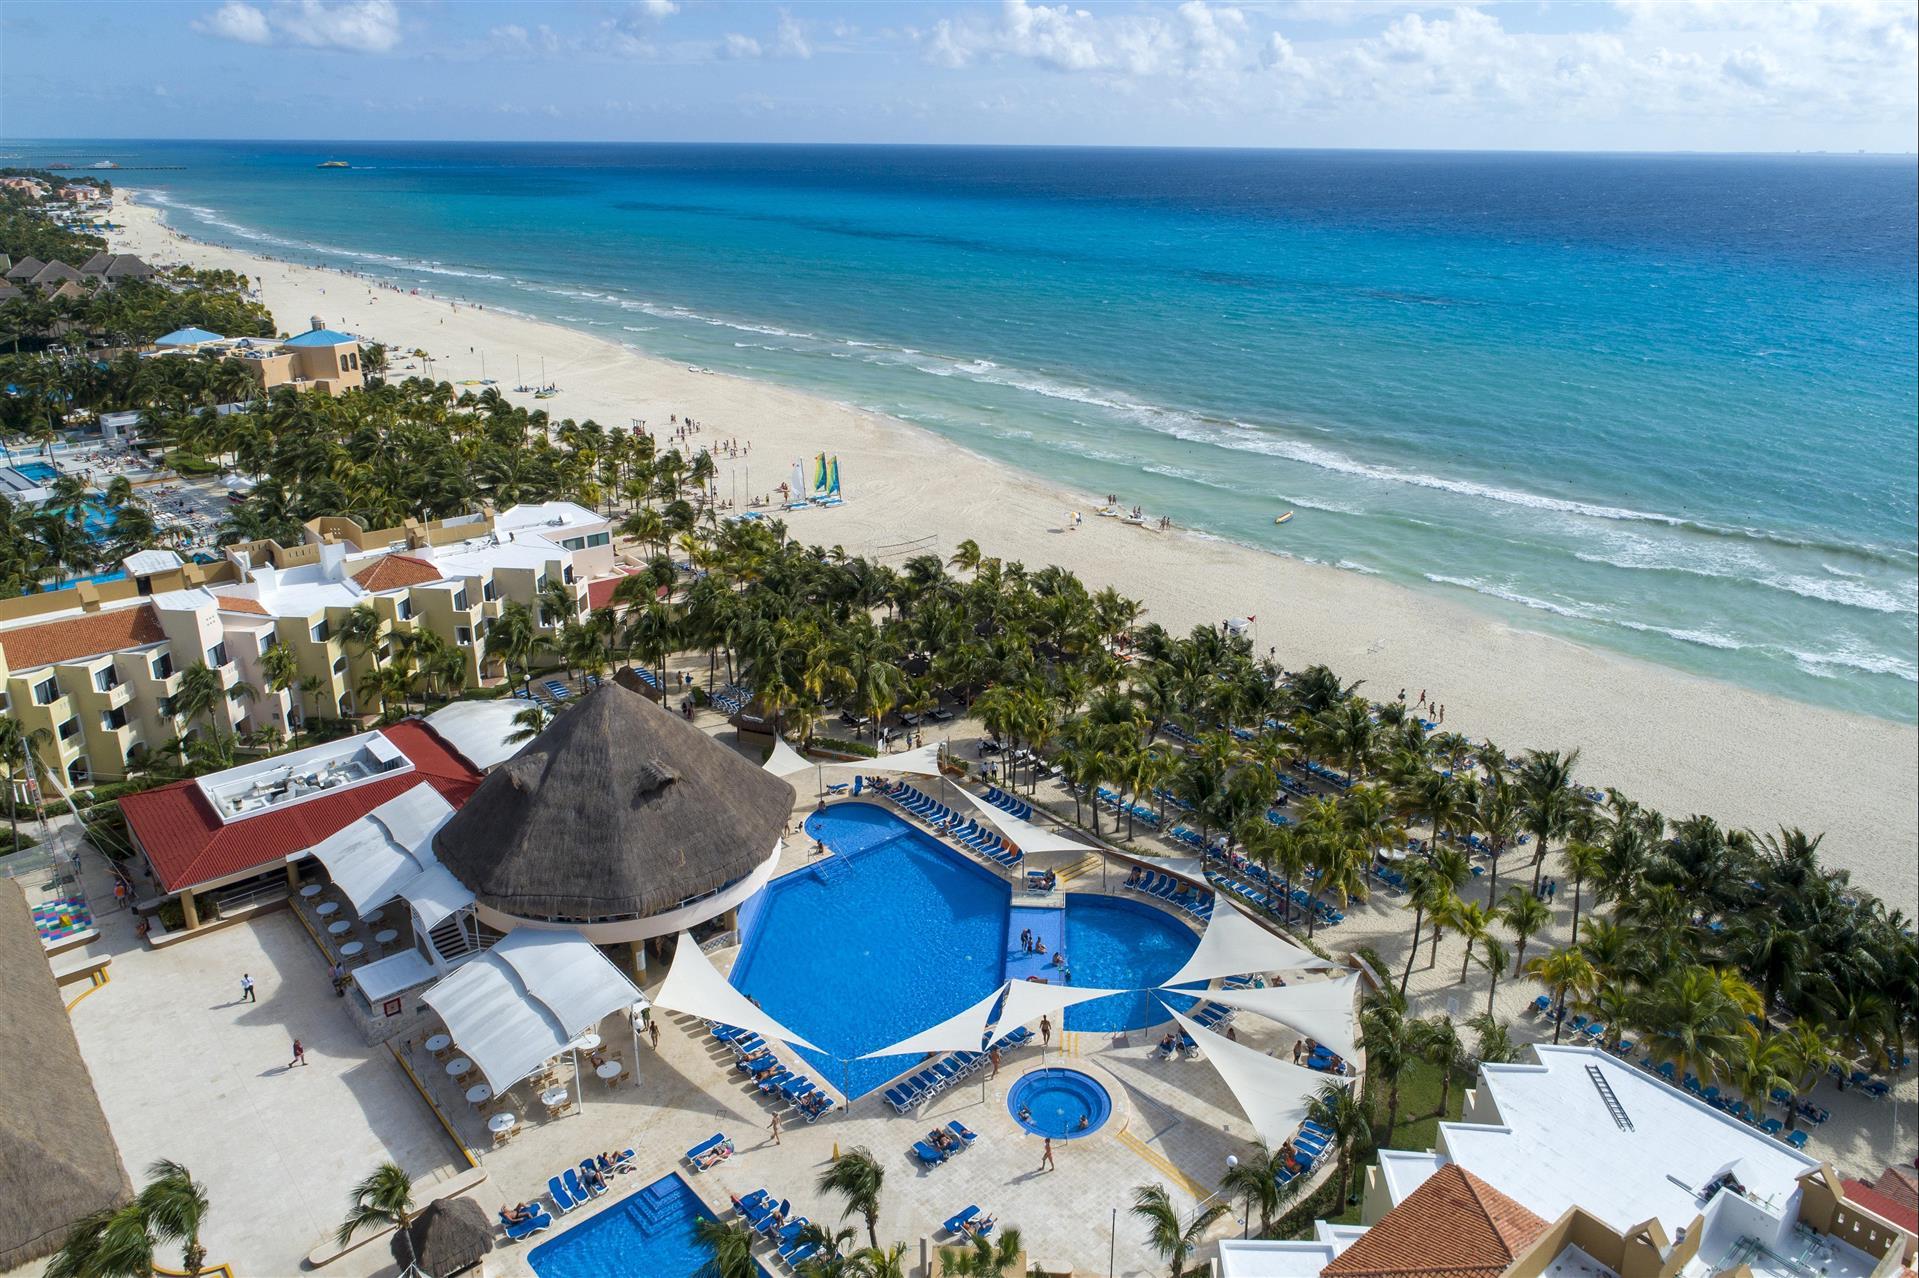 Viva Maya by Wyndham, a Trademark All Inclusive Resort in Playa del Carmen, MX